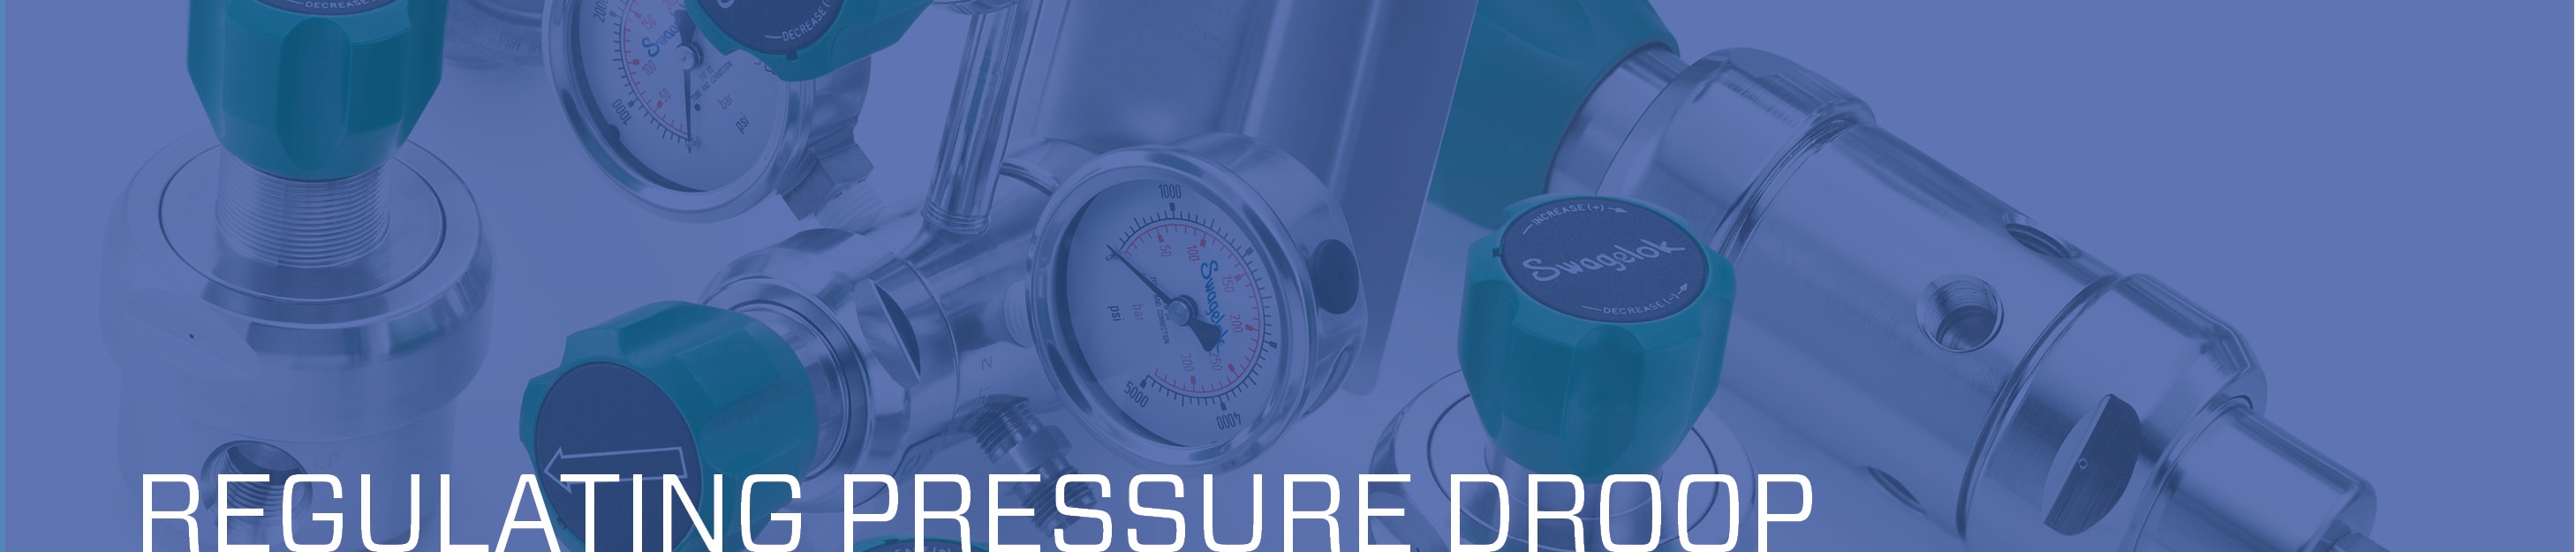 Regulating Pressure Droop